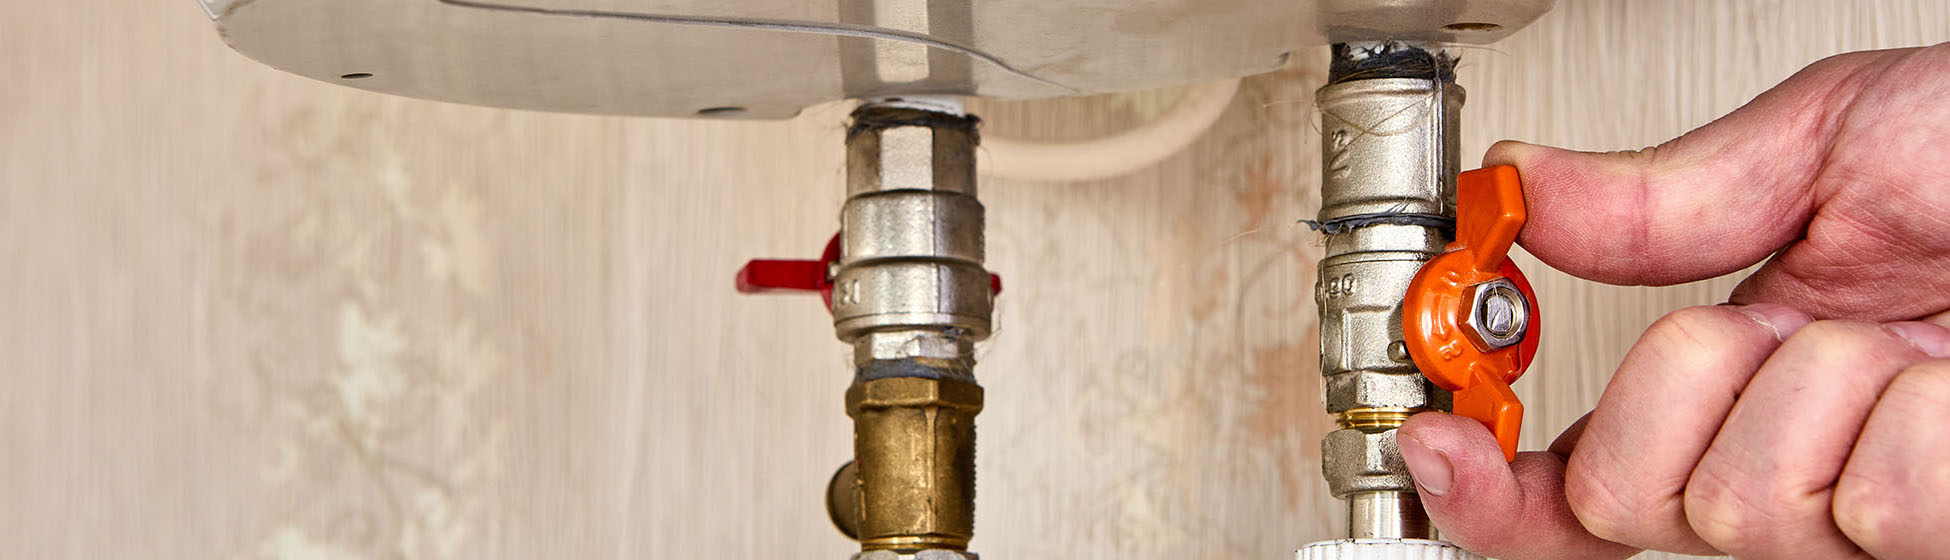 Installer mitigeur thermostatique chauffe eau